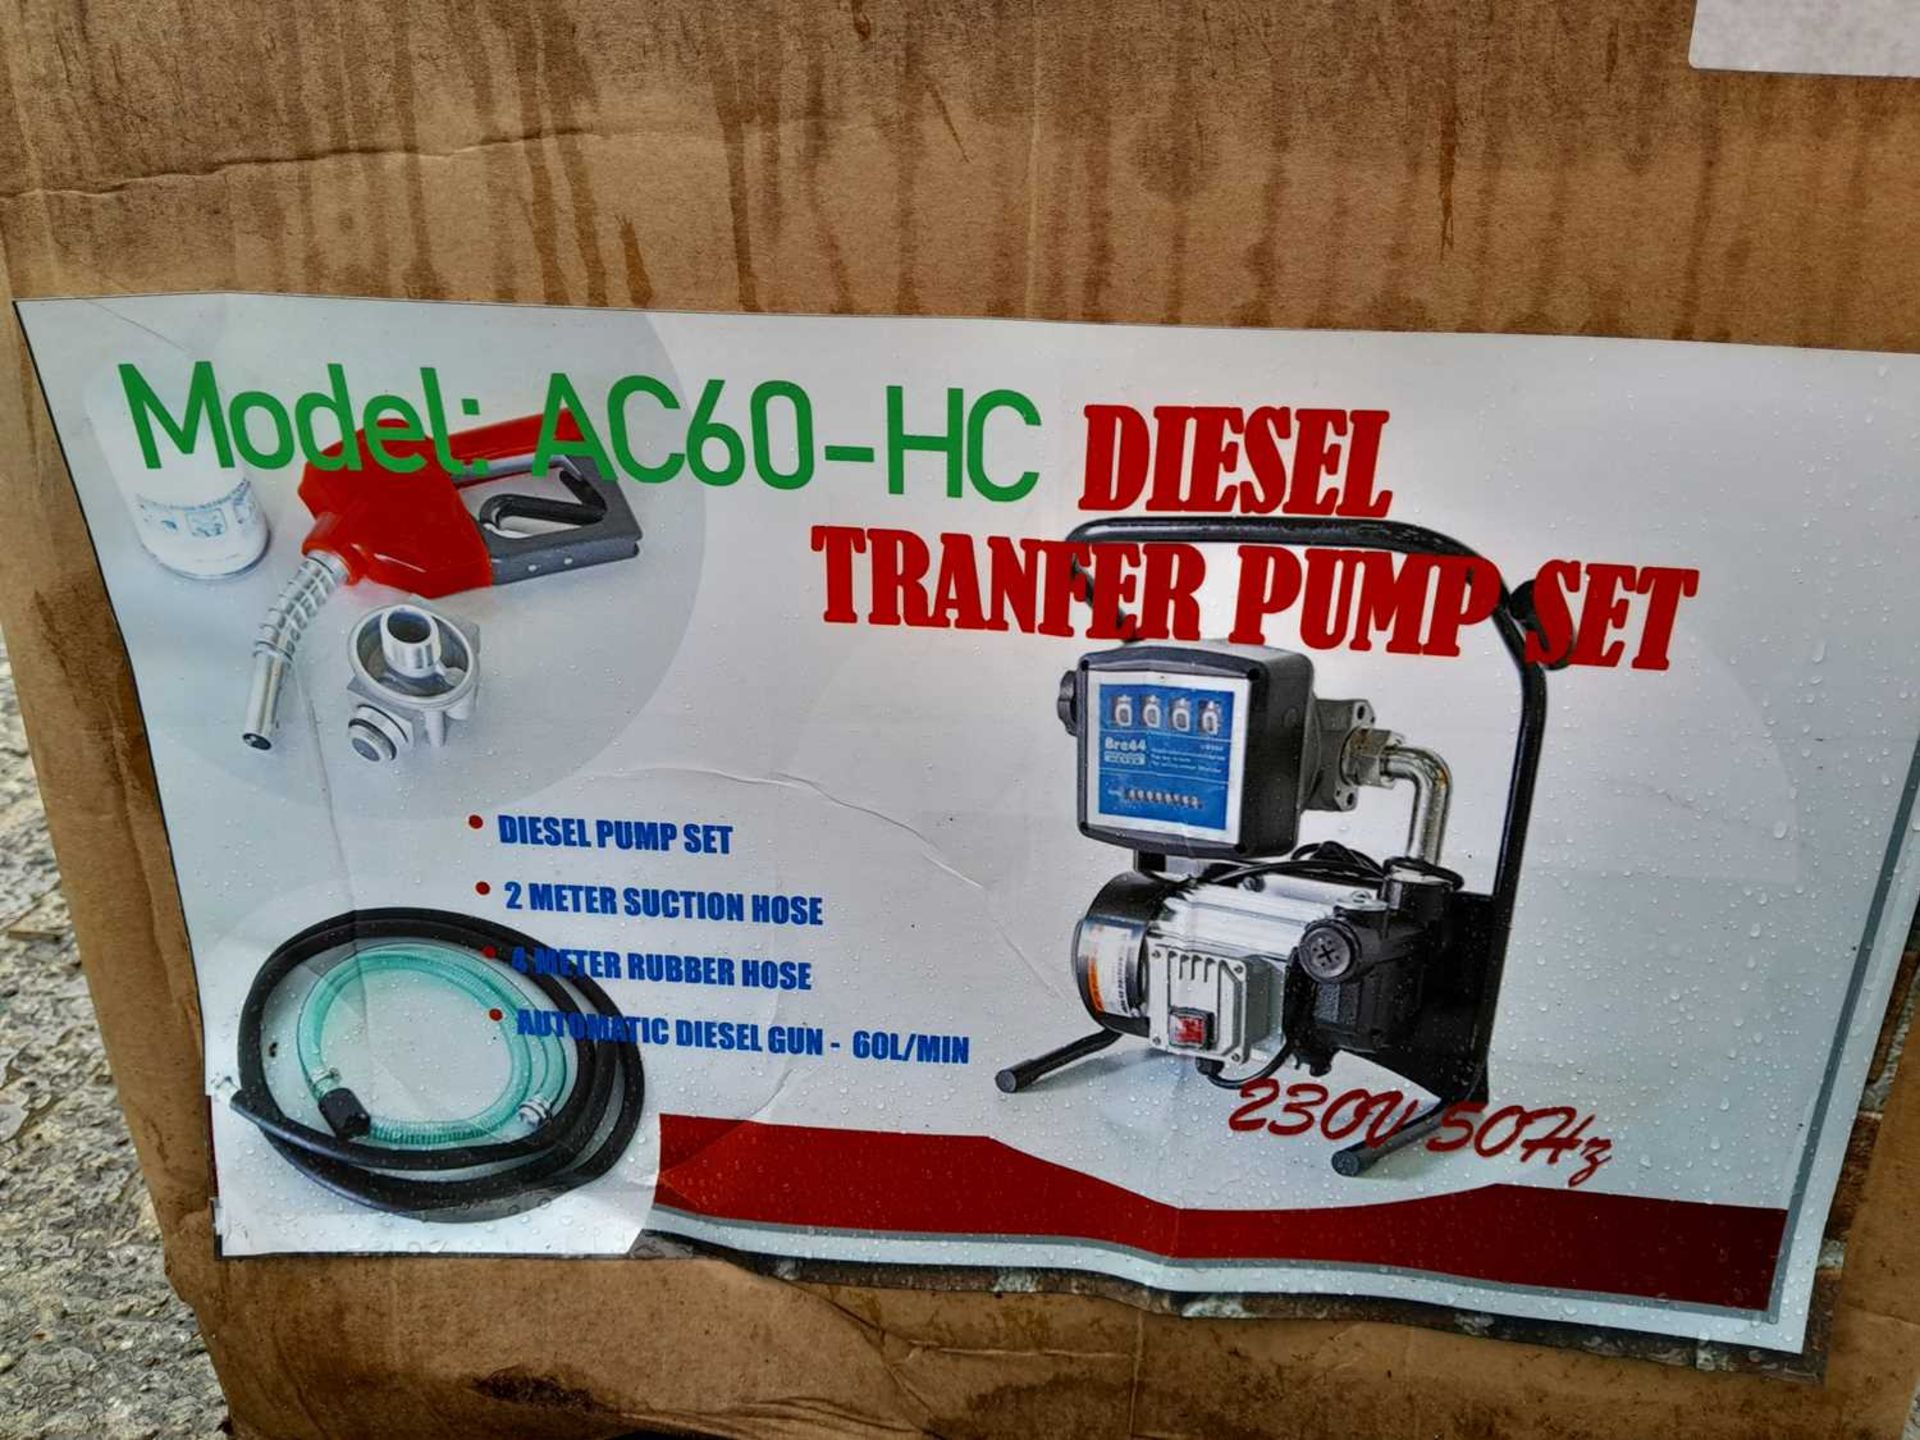 AC60-HC Diesel Transfer Pump